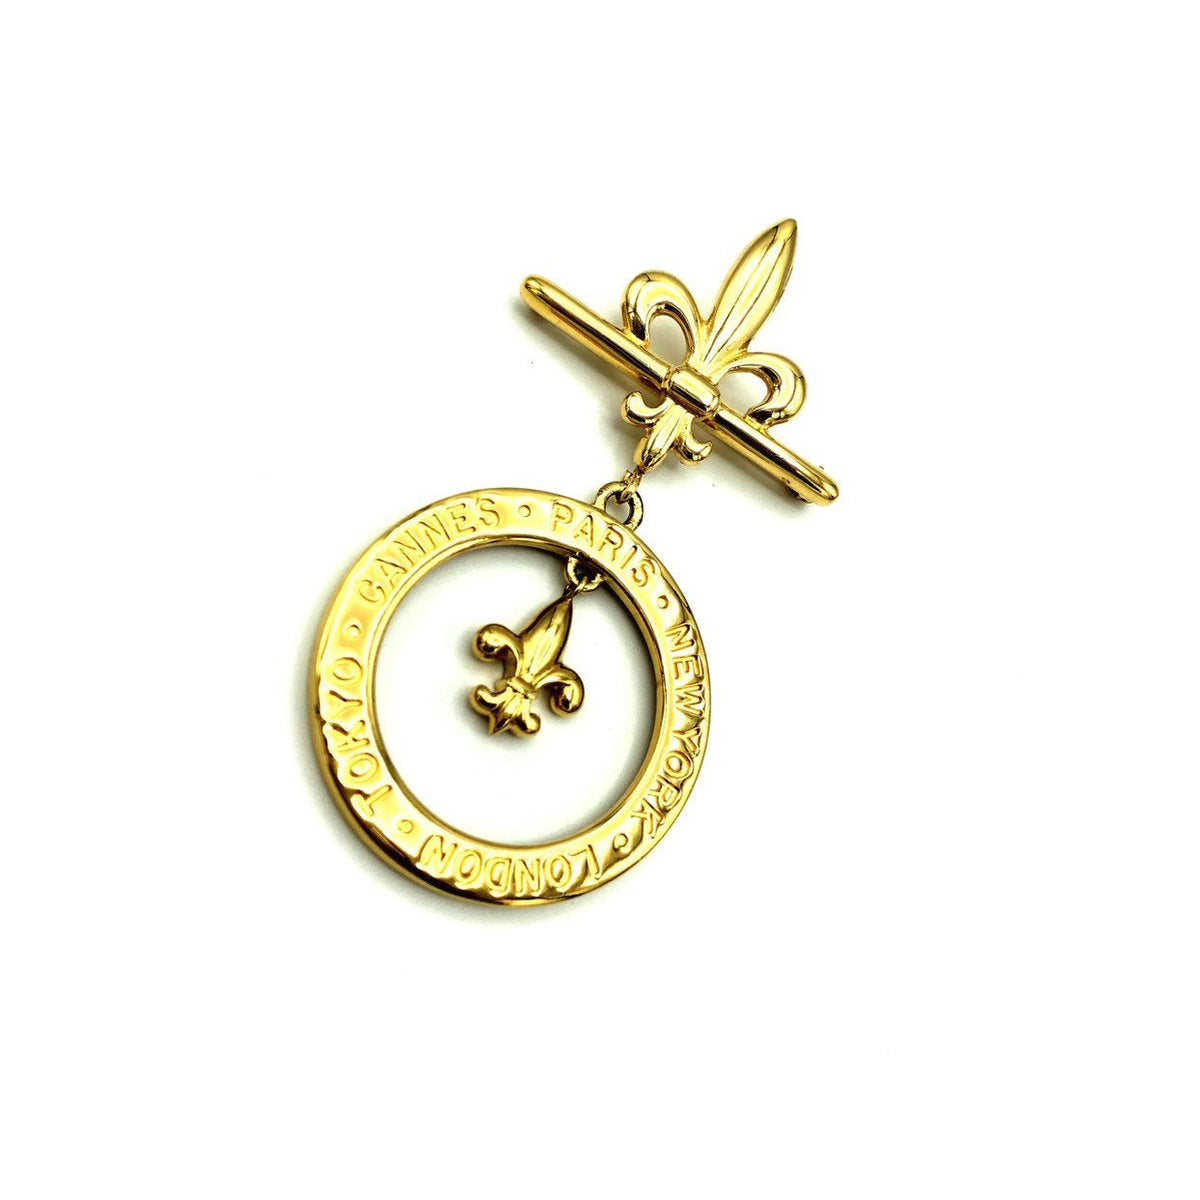 Vintage Gold Givenchy Fleur-de-lis Brooch - 24 Wishes Vintage Jewelry